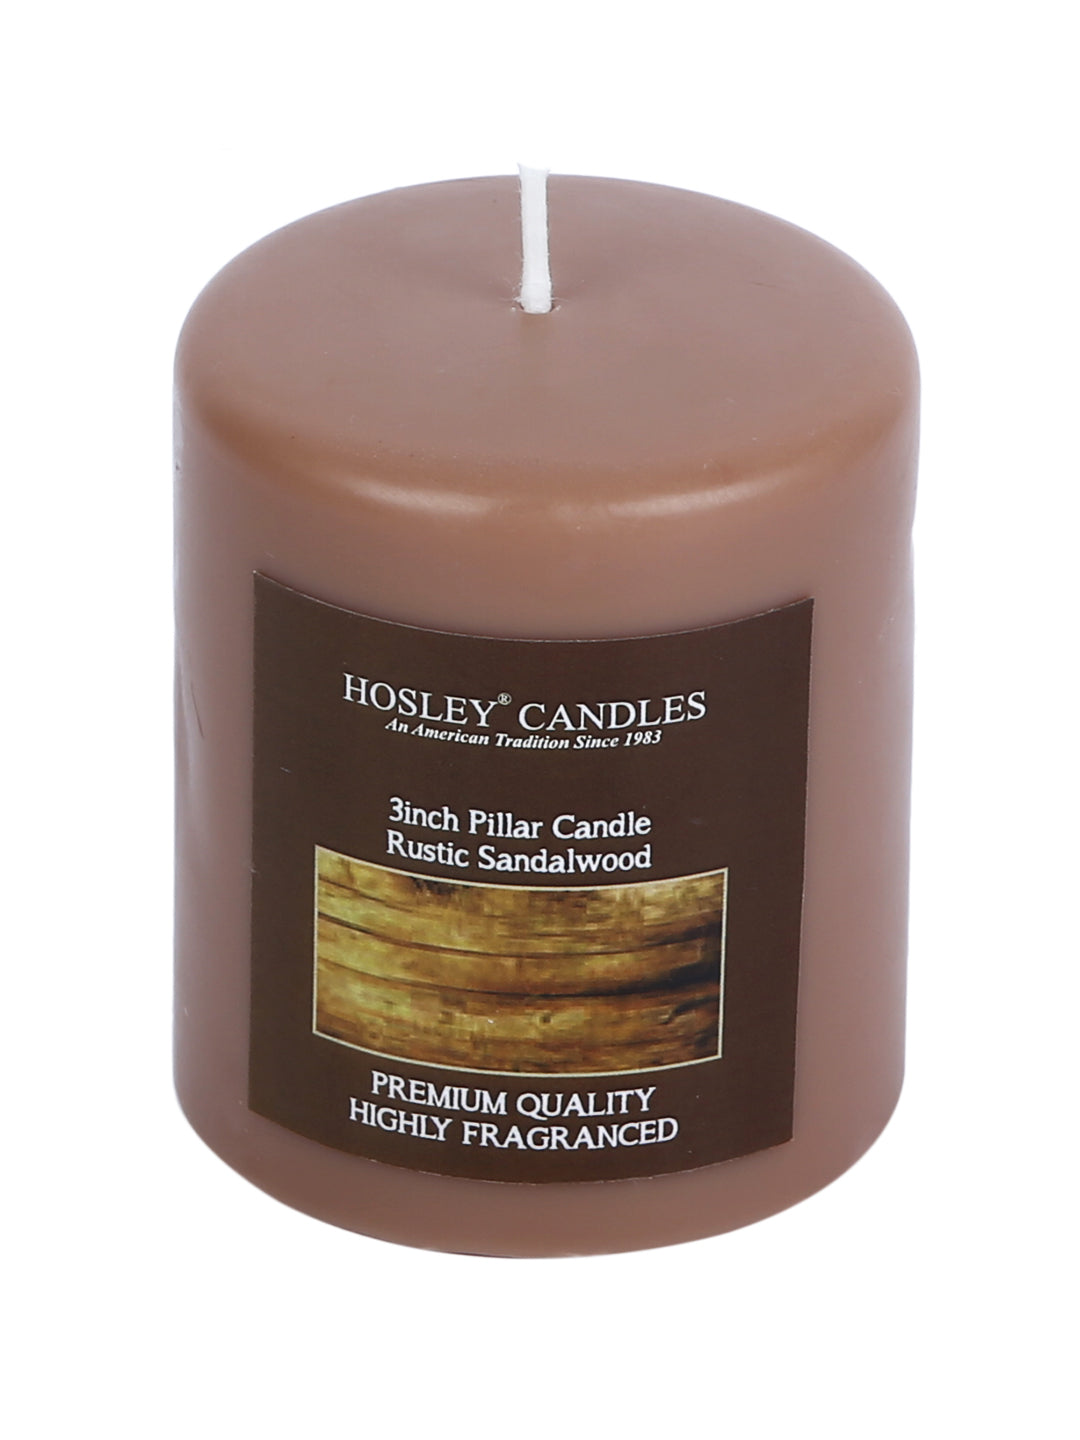 Hosley® Rustic Sandalwood Highly Fragranced 3inch Pillar Candle